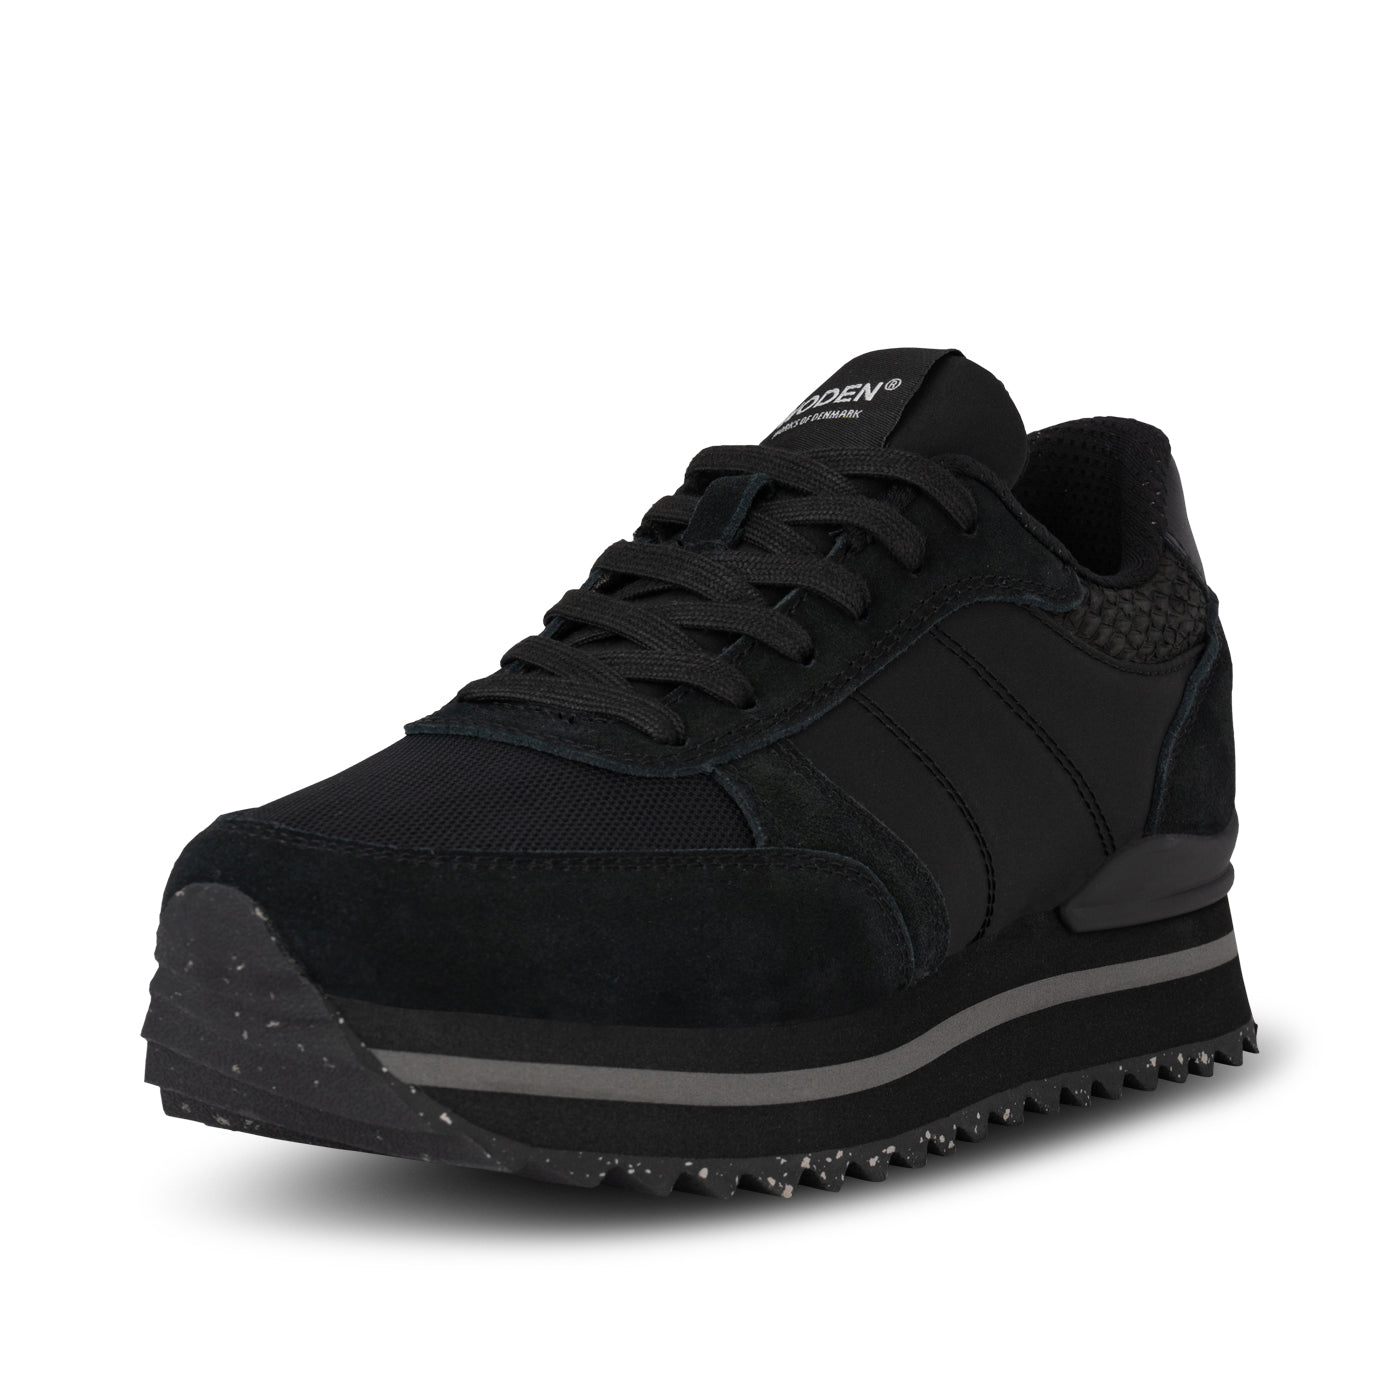 WODEN Ronja Plateau Sneakers 020 Black